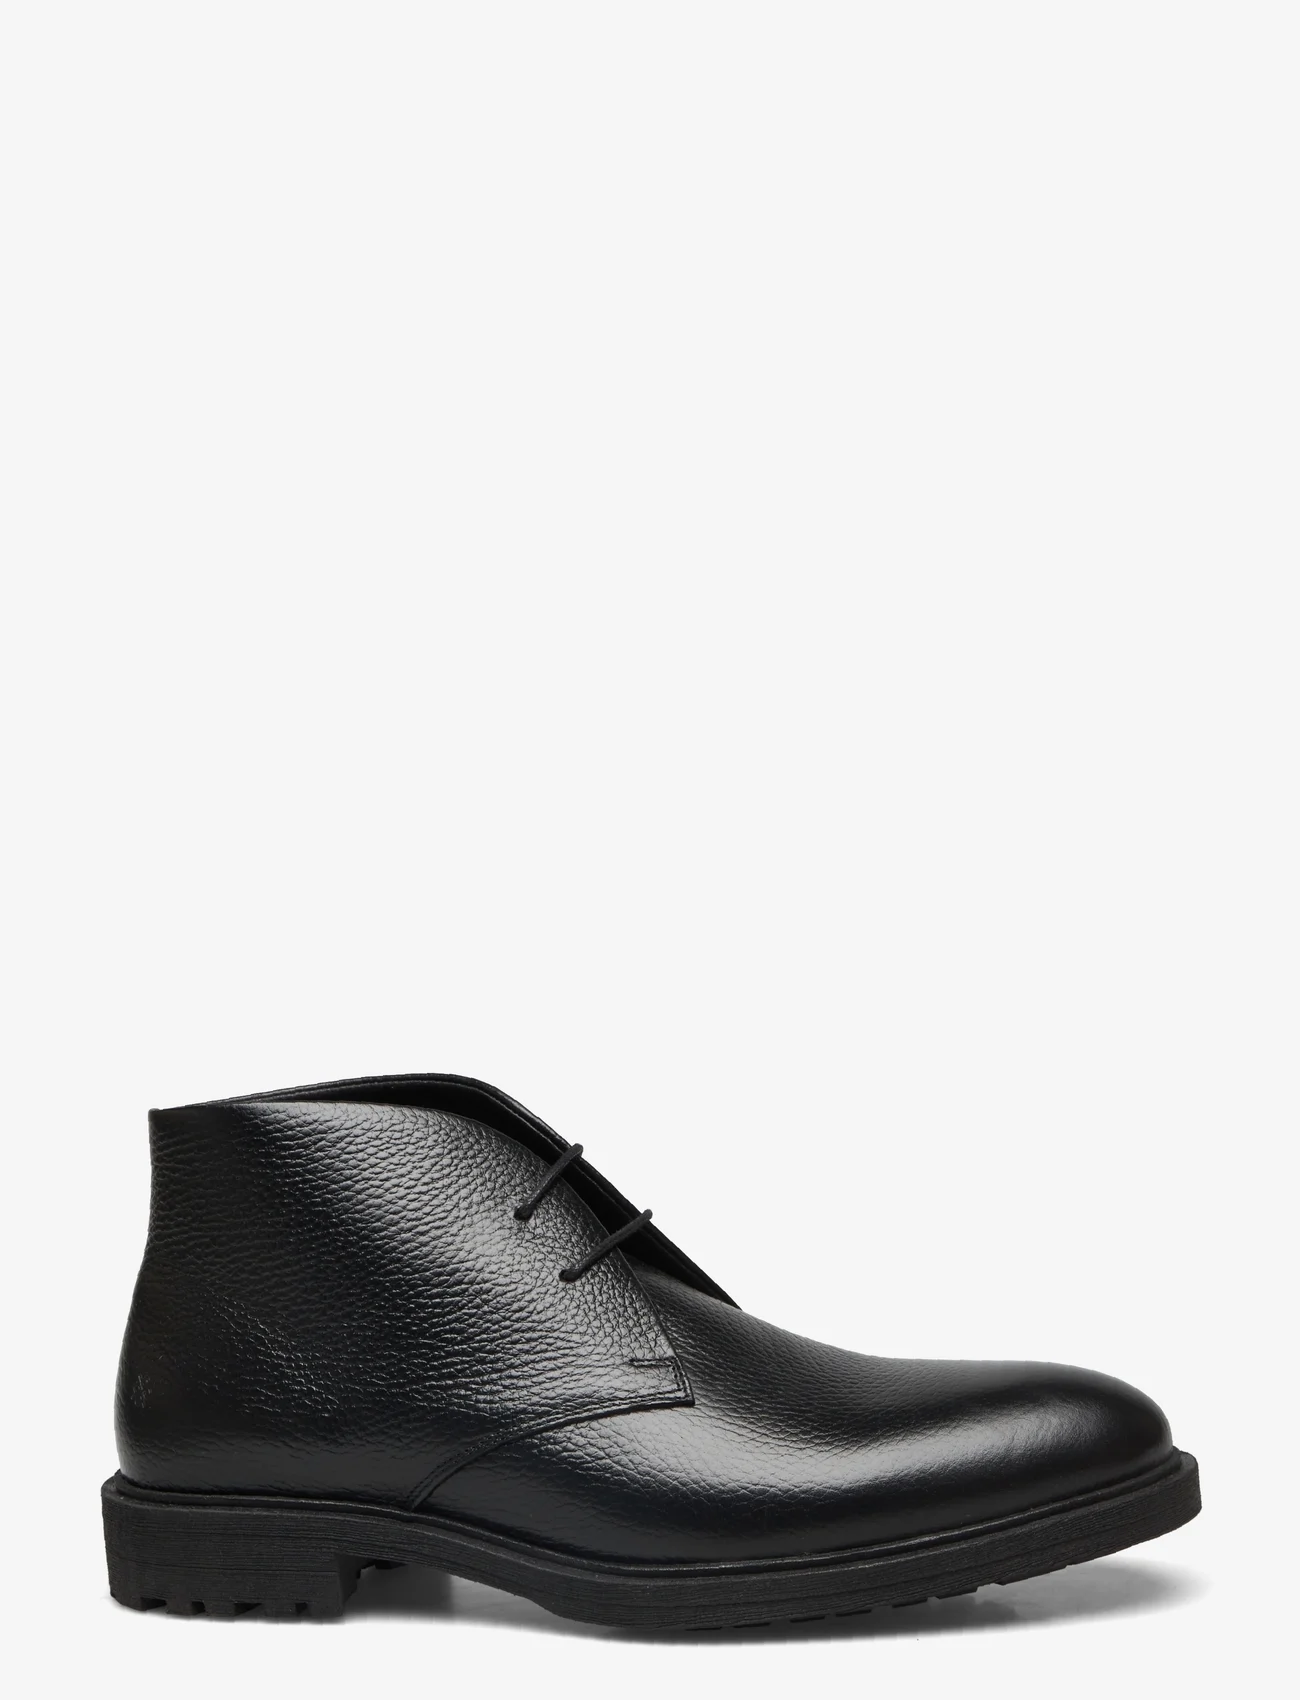 Playboy Footwear - Jacky - black tumbled leather - 1